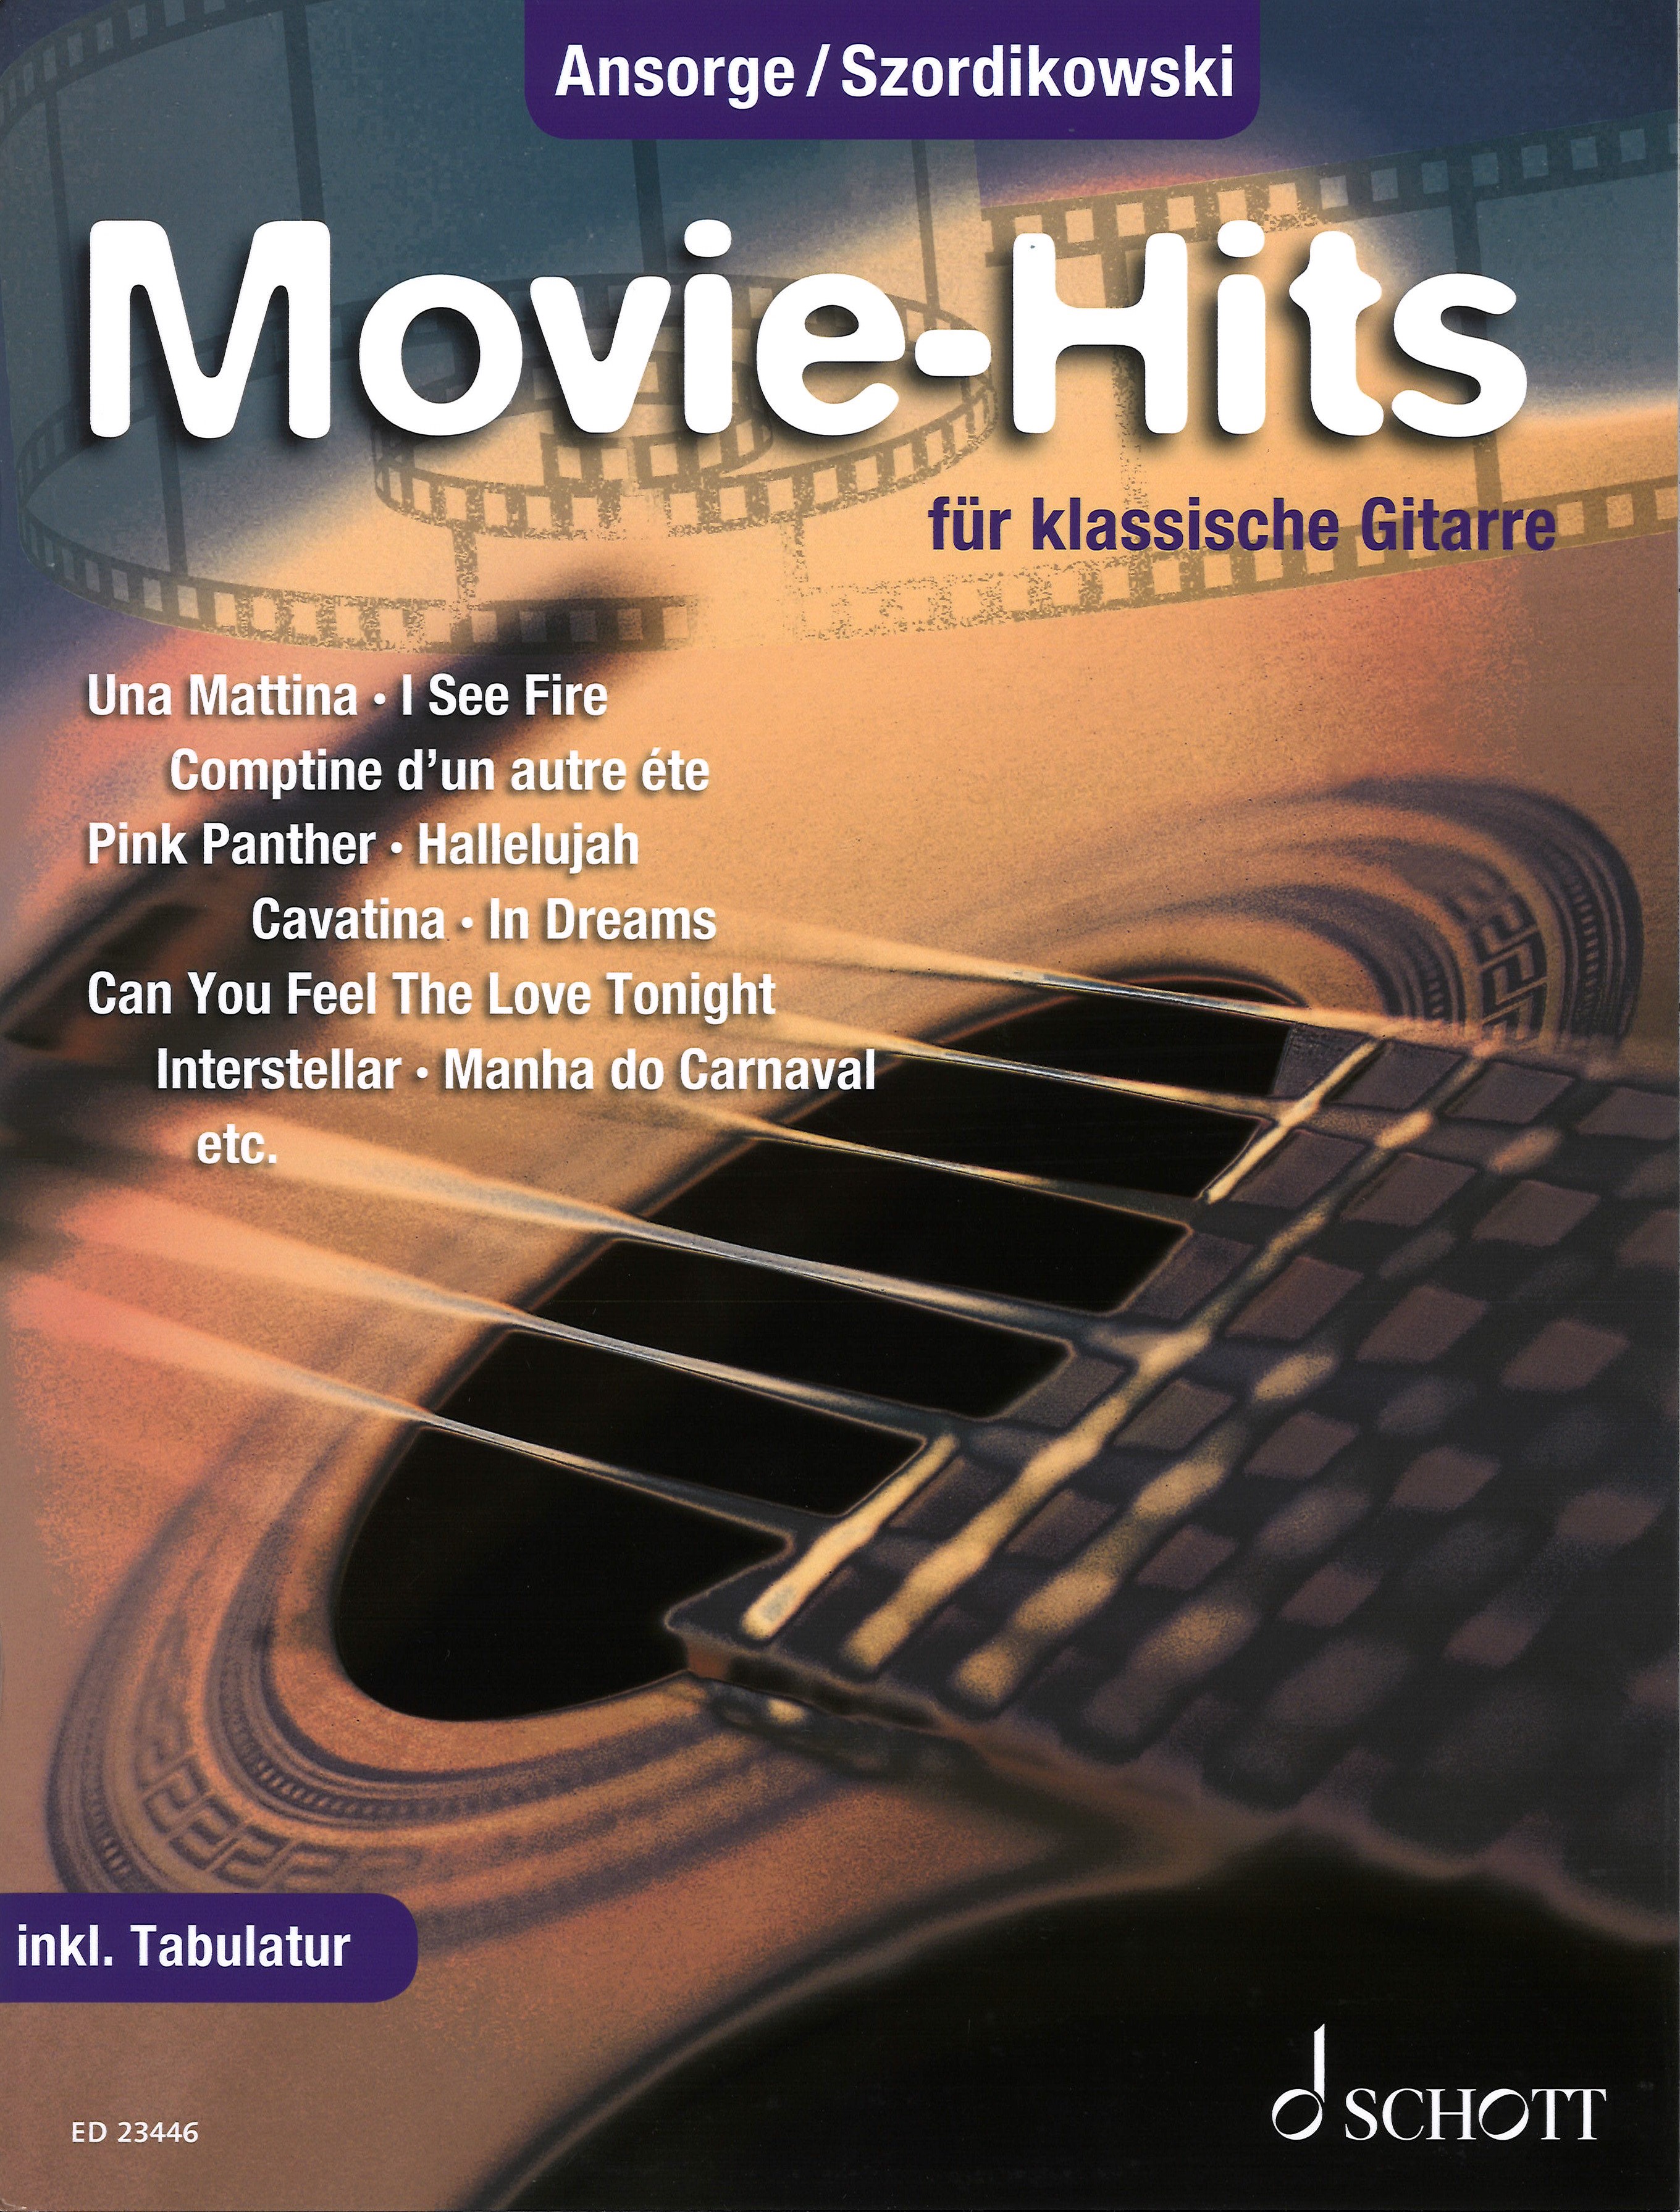 Movie-hits Classical Guitar Tab Sheet Music Songbook